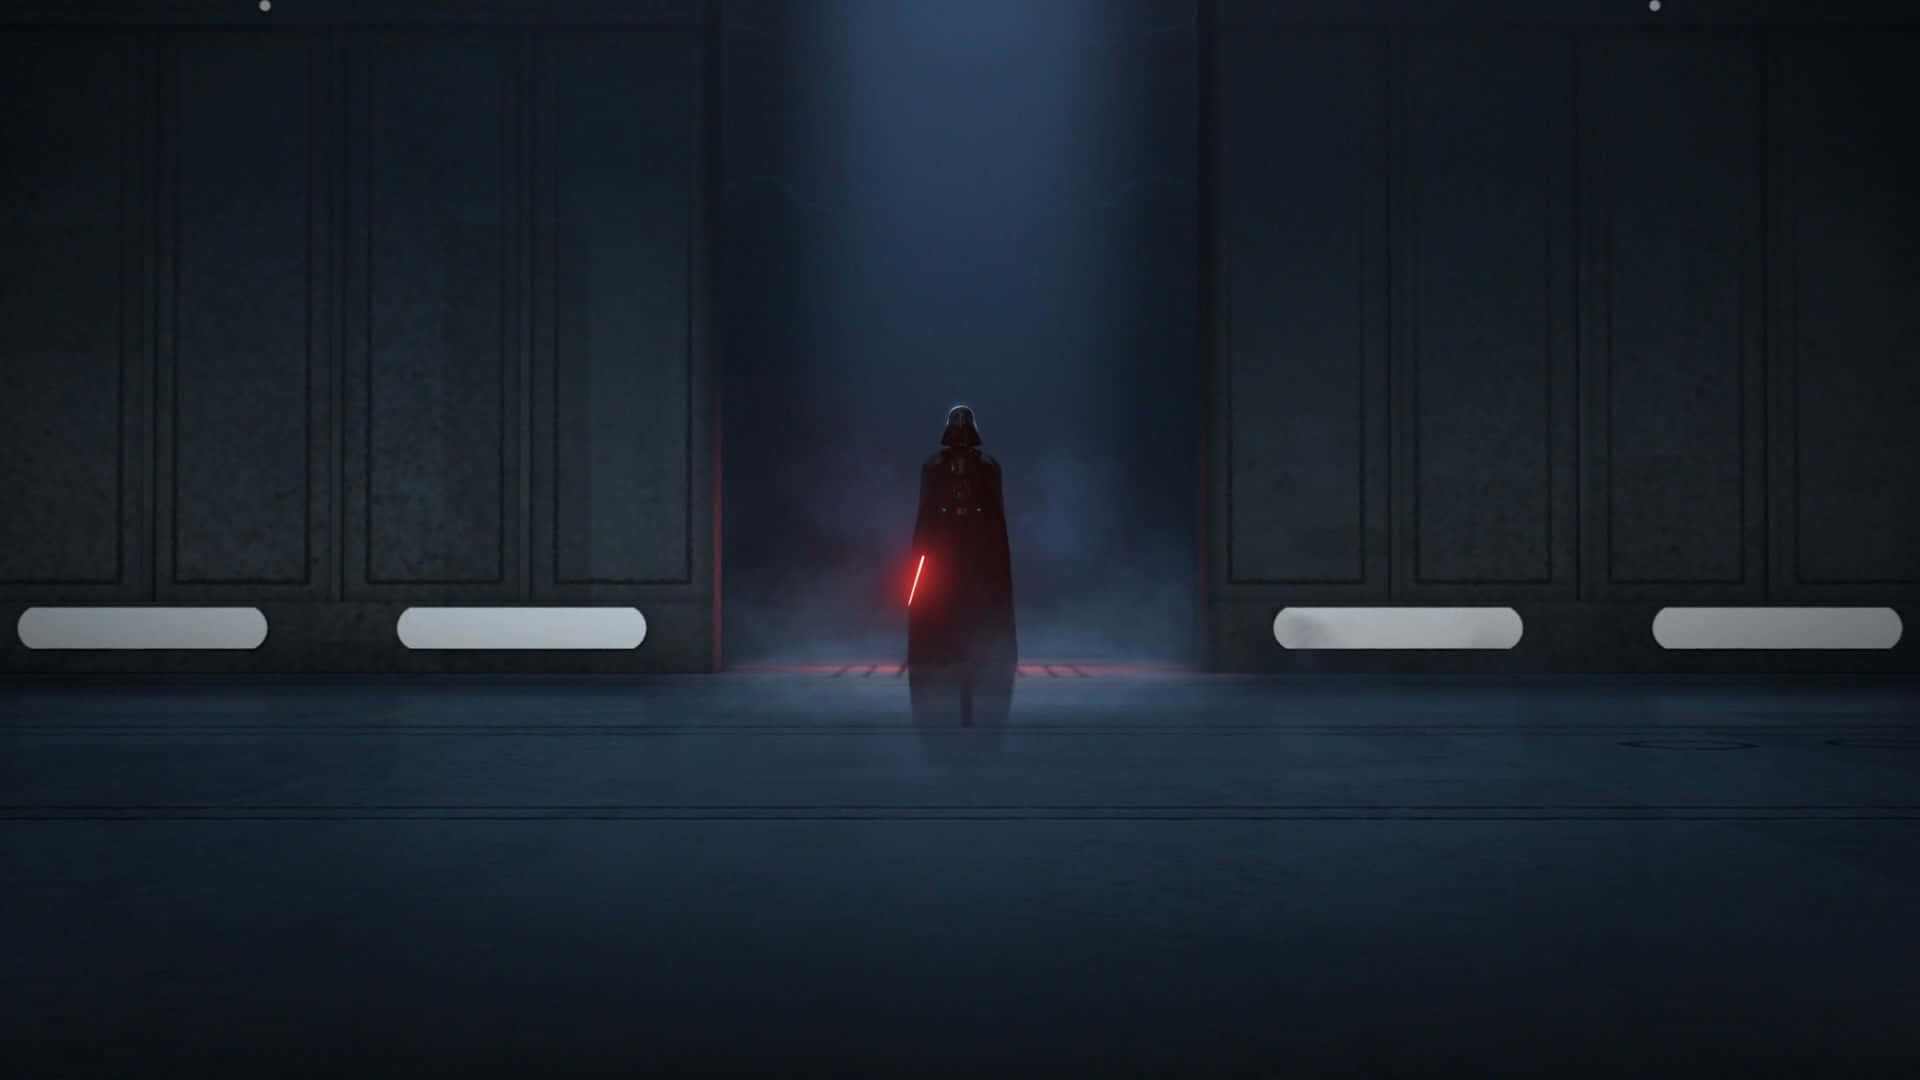 Darth Vader, the iconic villain of Star Wars